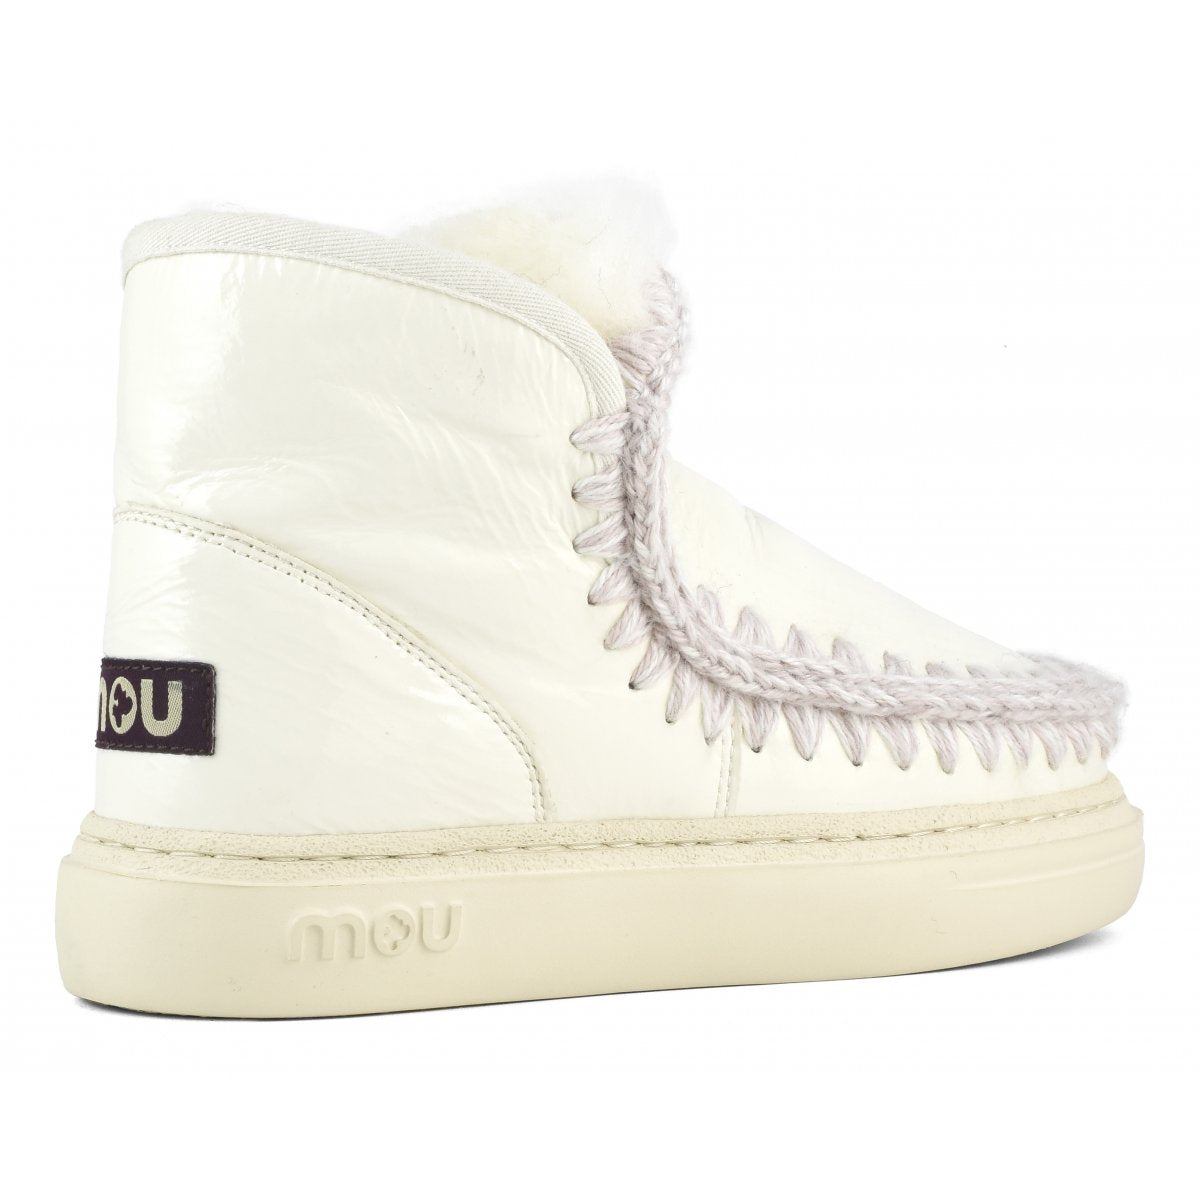 MOU eskimo sneaker bold patent white